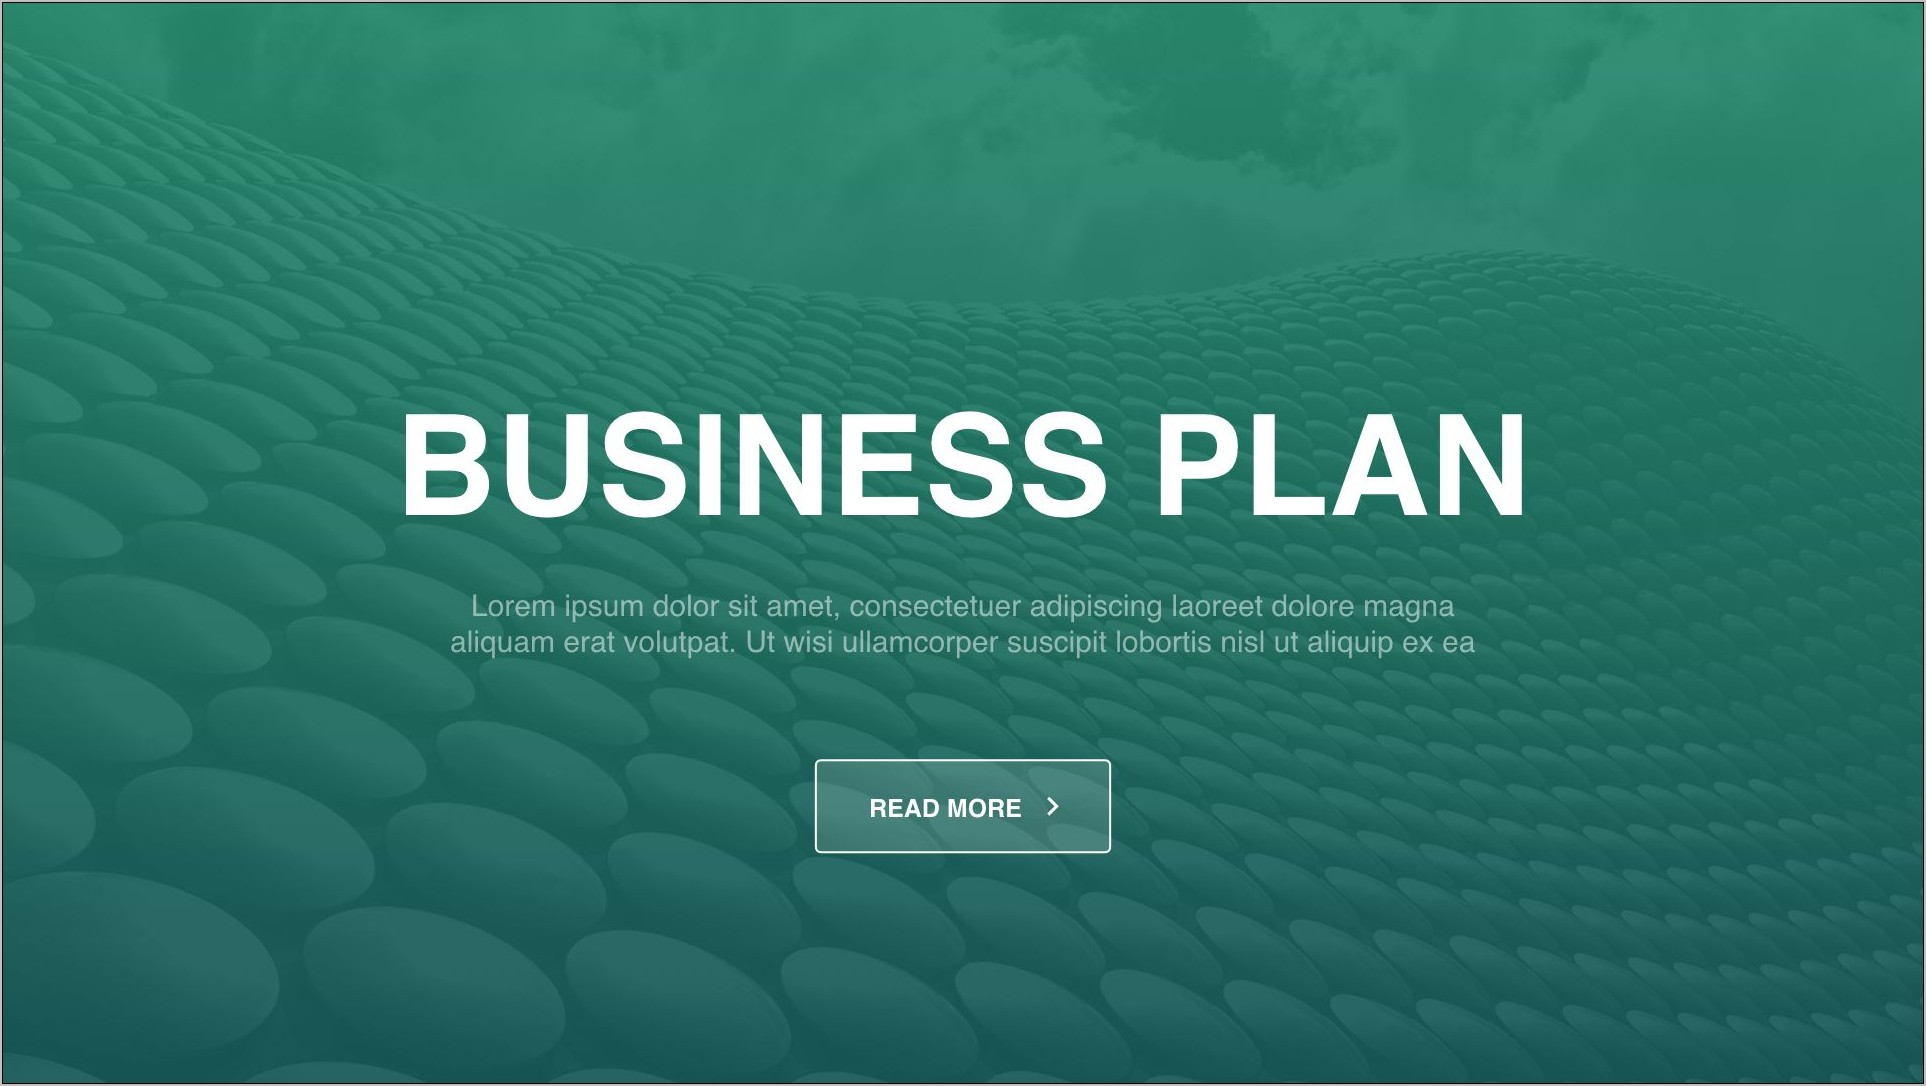 Business Plan Keynote Template Free Download